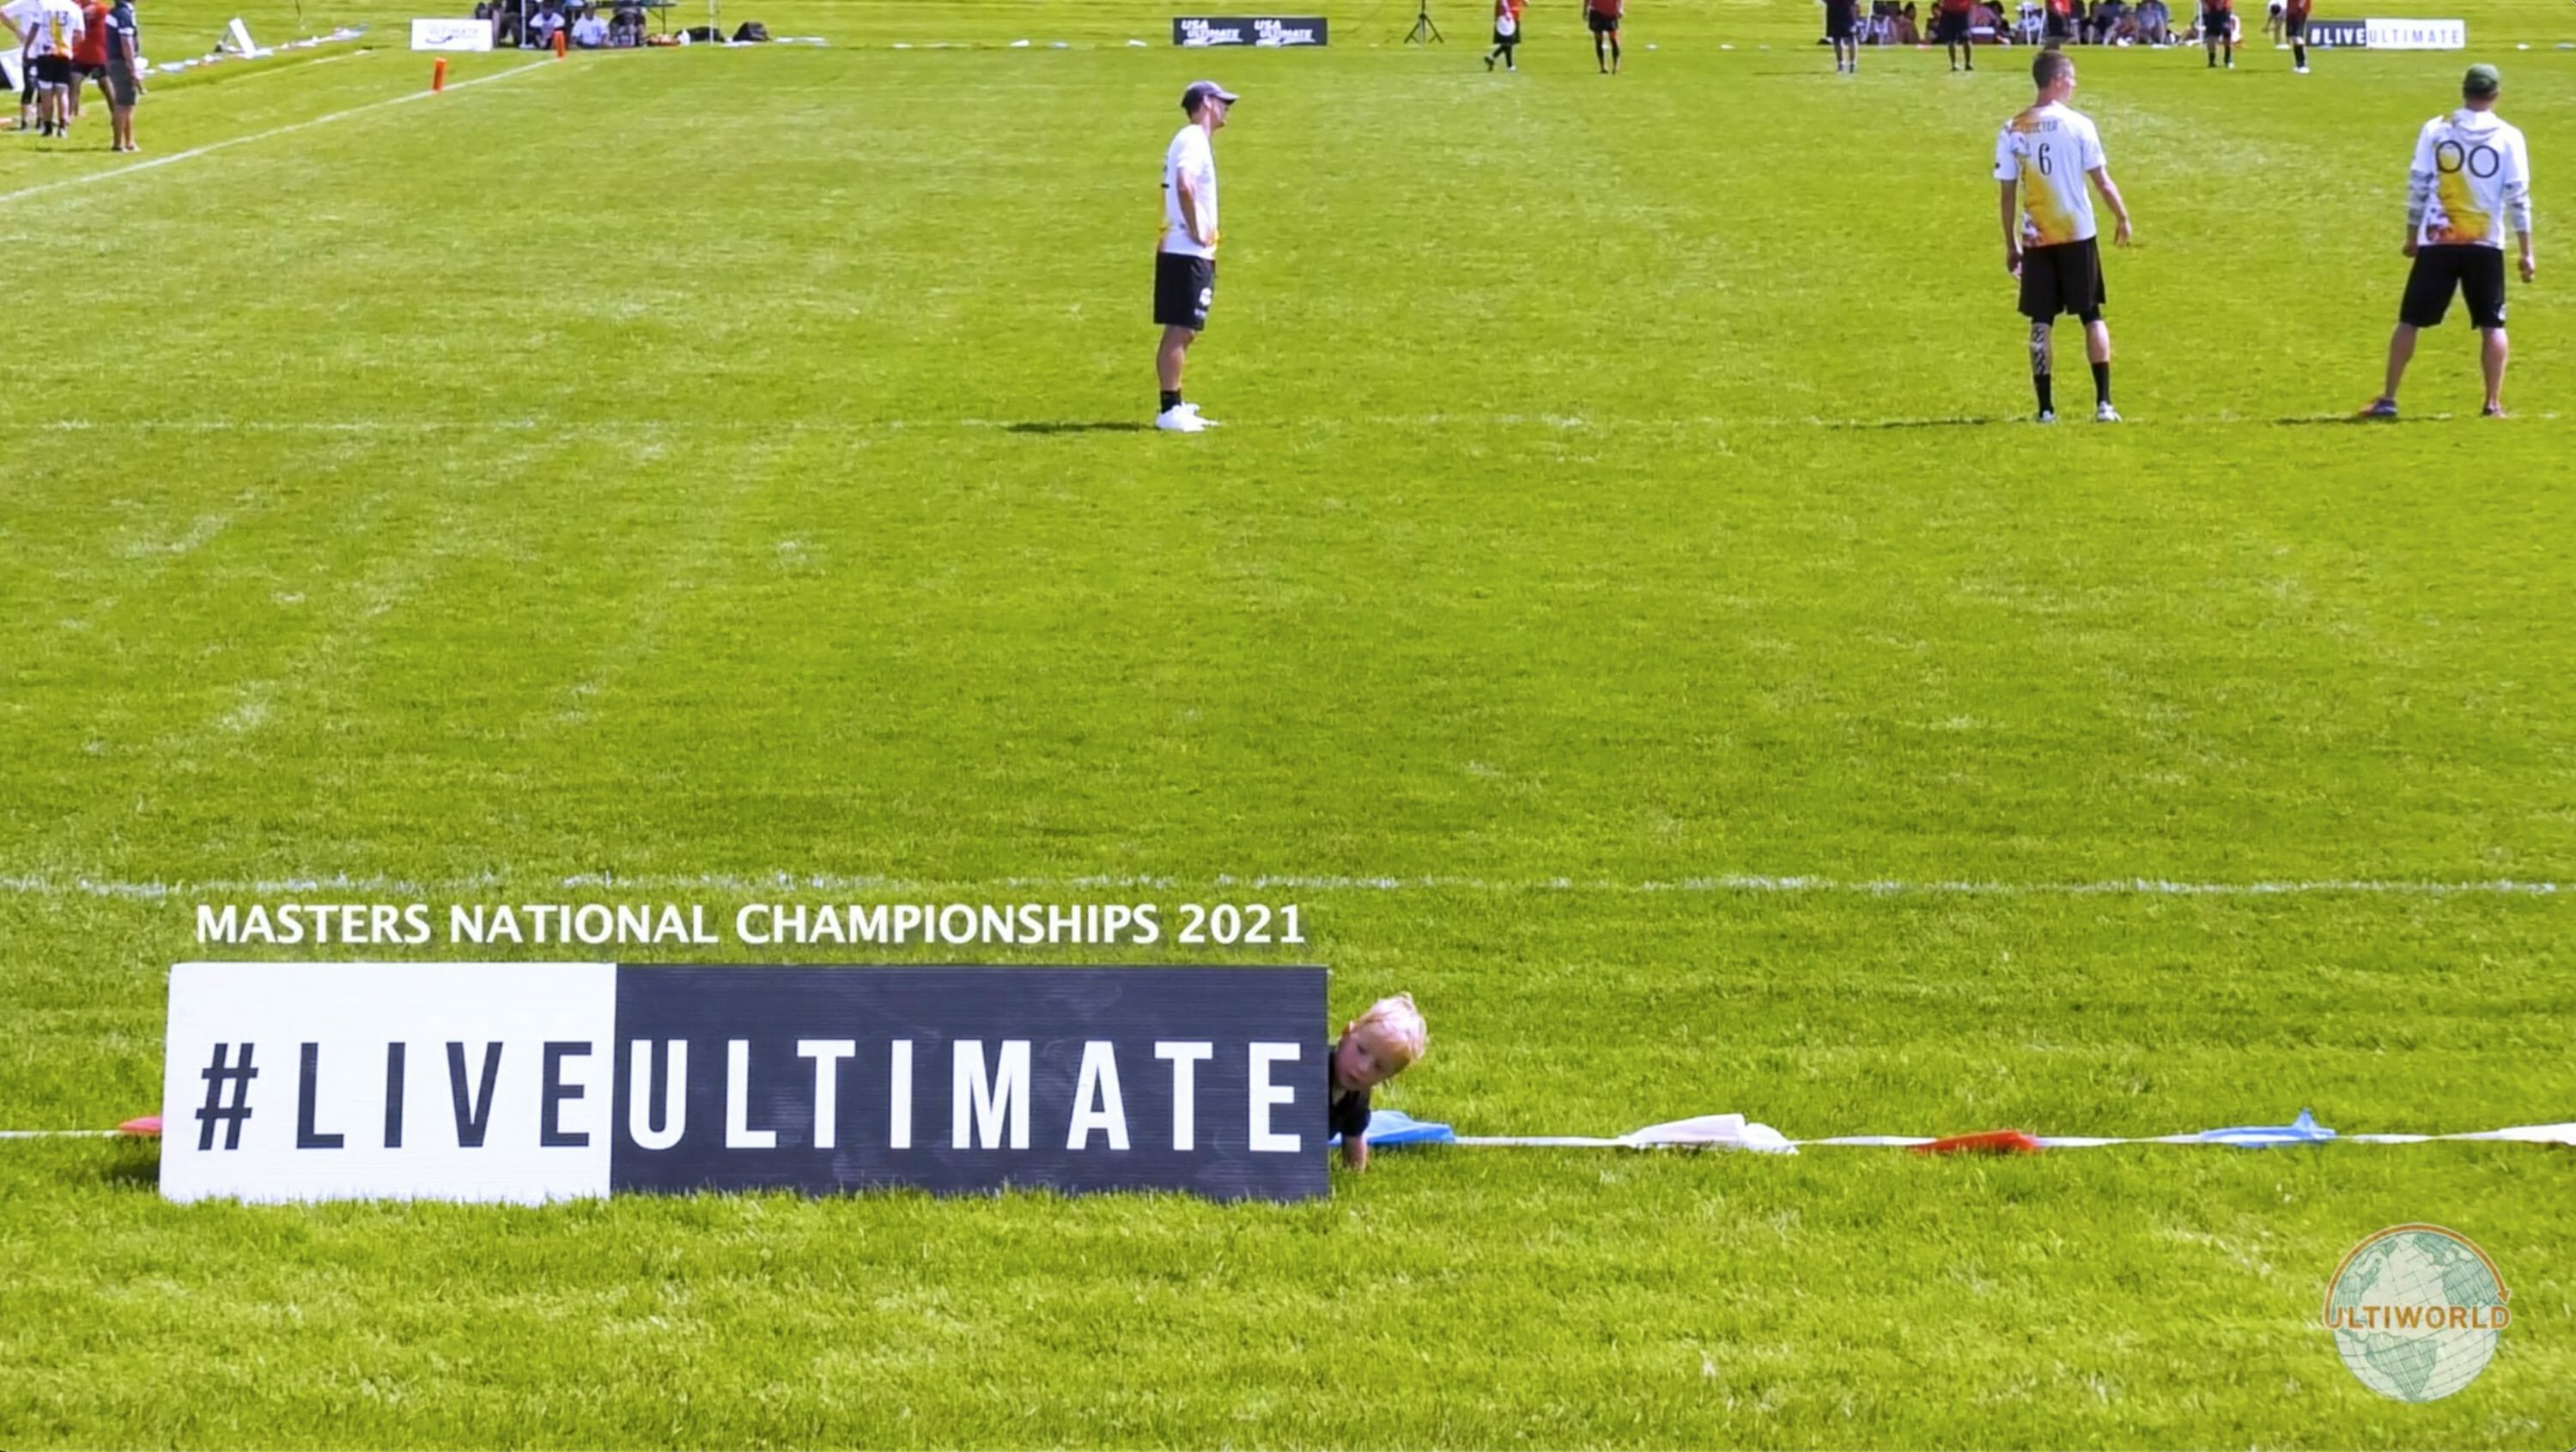 Masters National Championships 2021 Highlights - Ultiworld